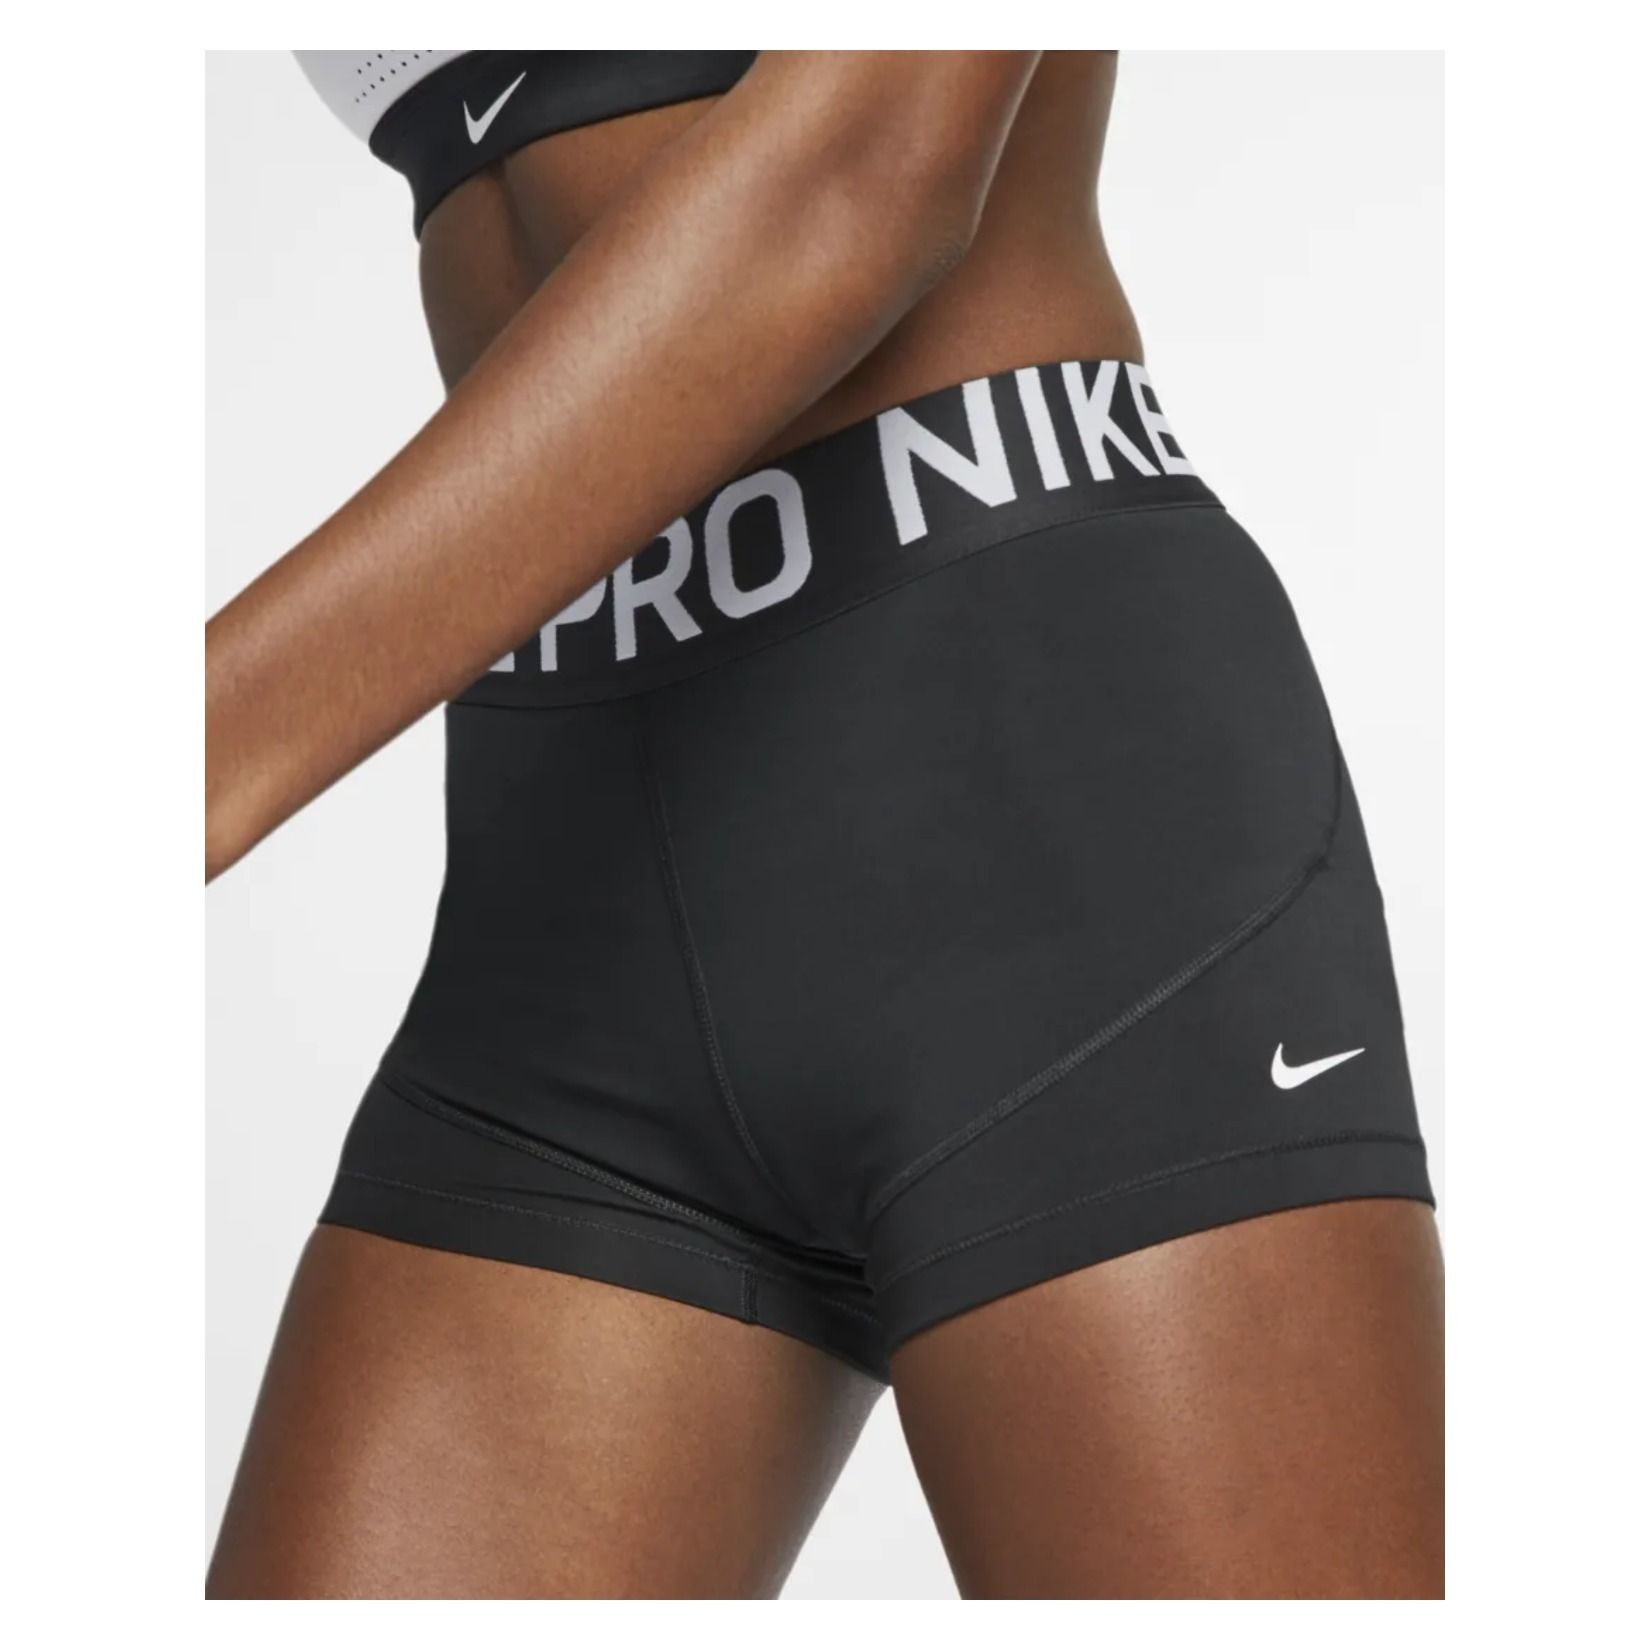 nike pro shorts size xs